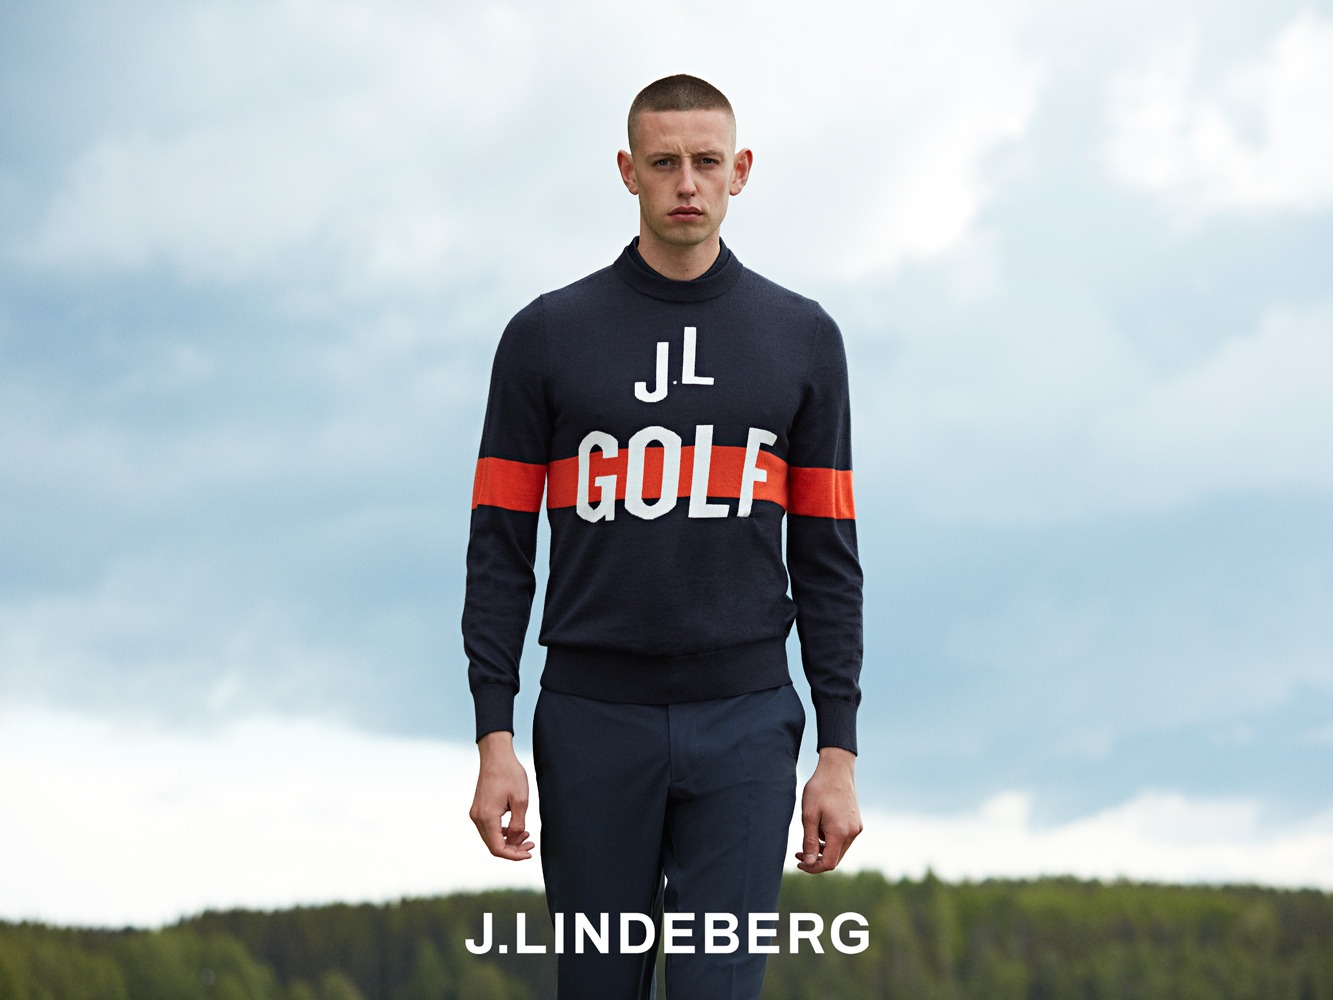 J Lindeberg Golf 4 by Pelle LANNEFORS